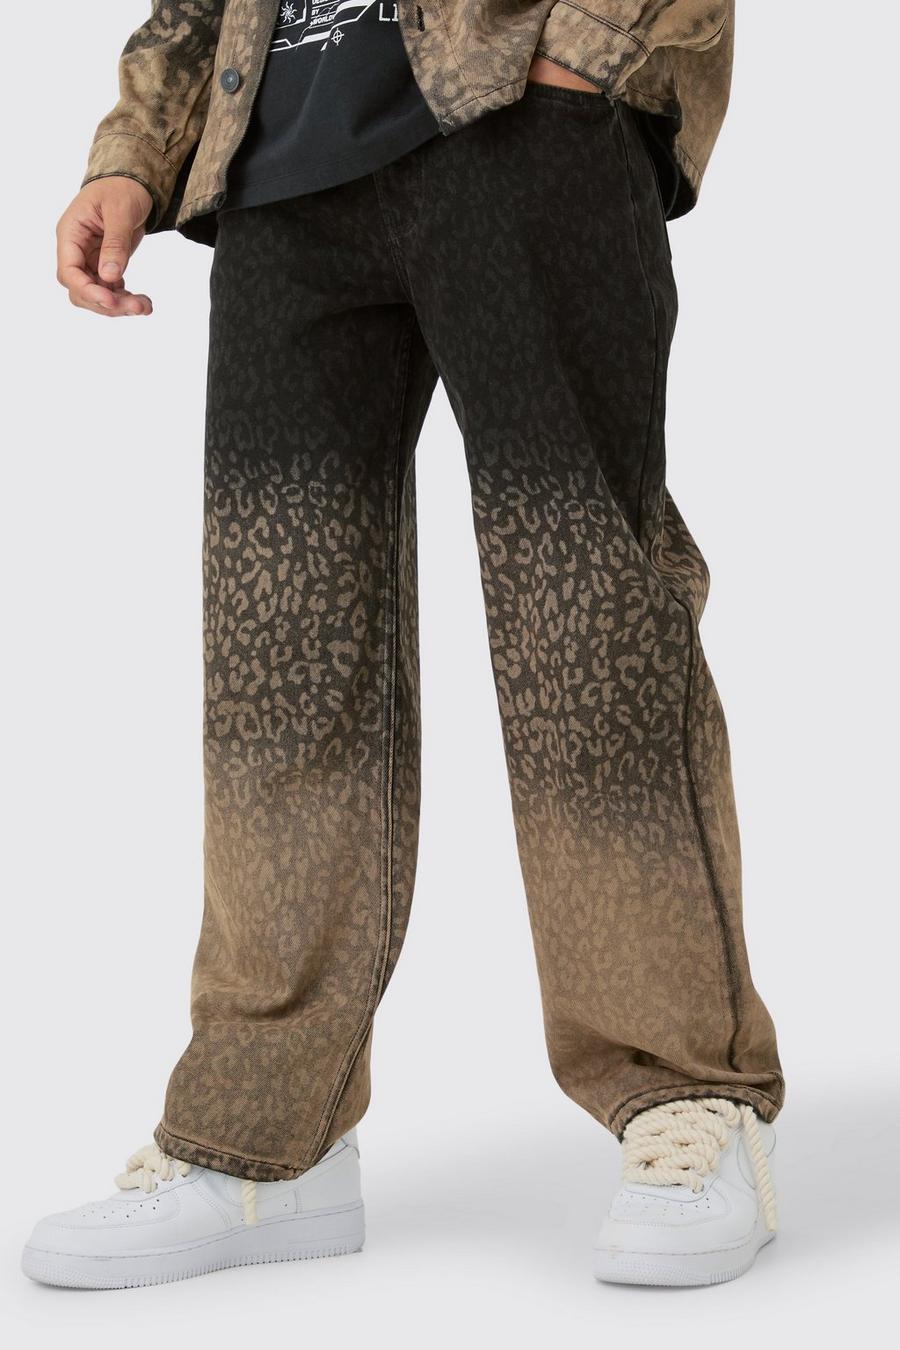 Lockere Jeans mit Leopardenprint in Schwarz, Black